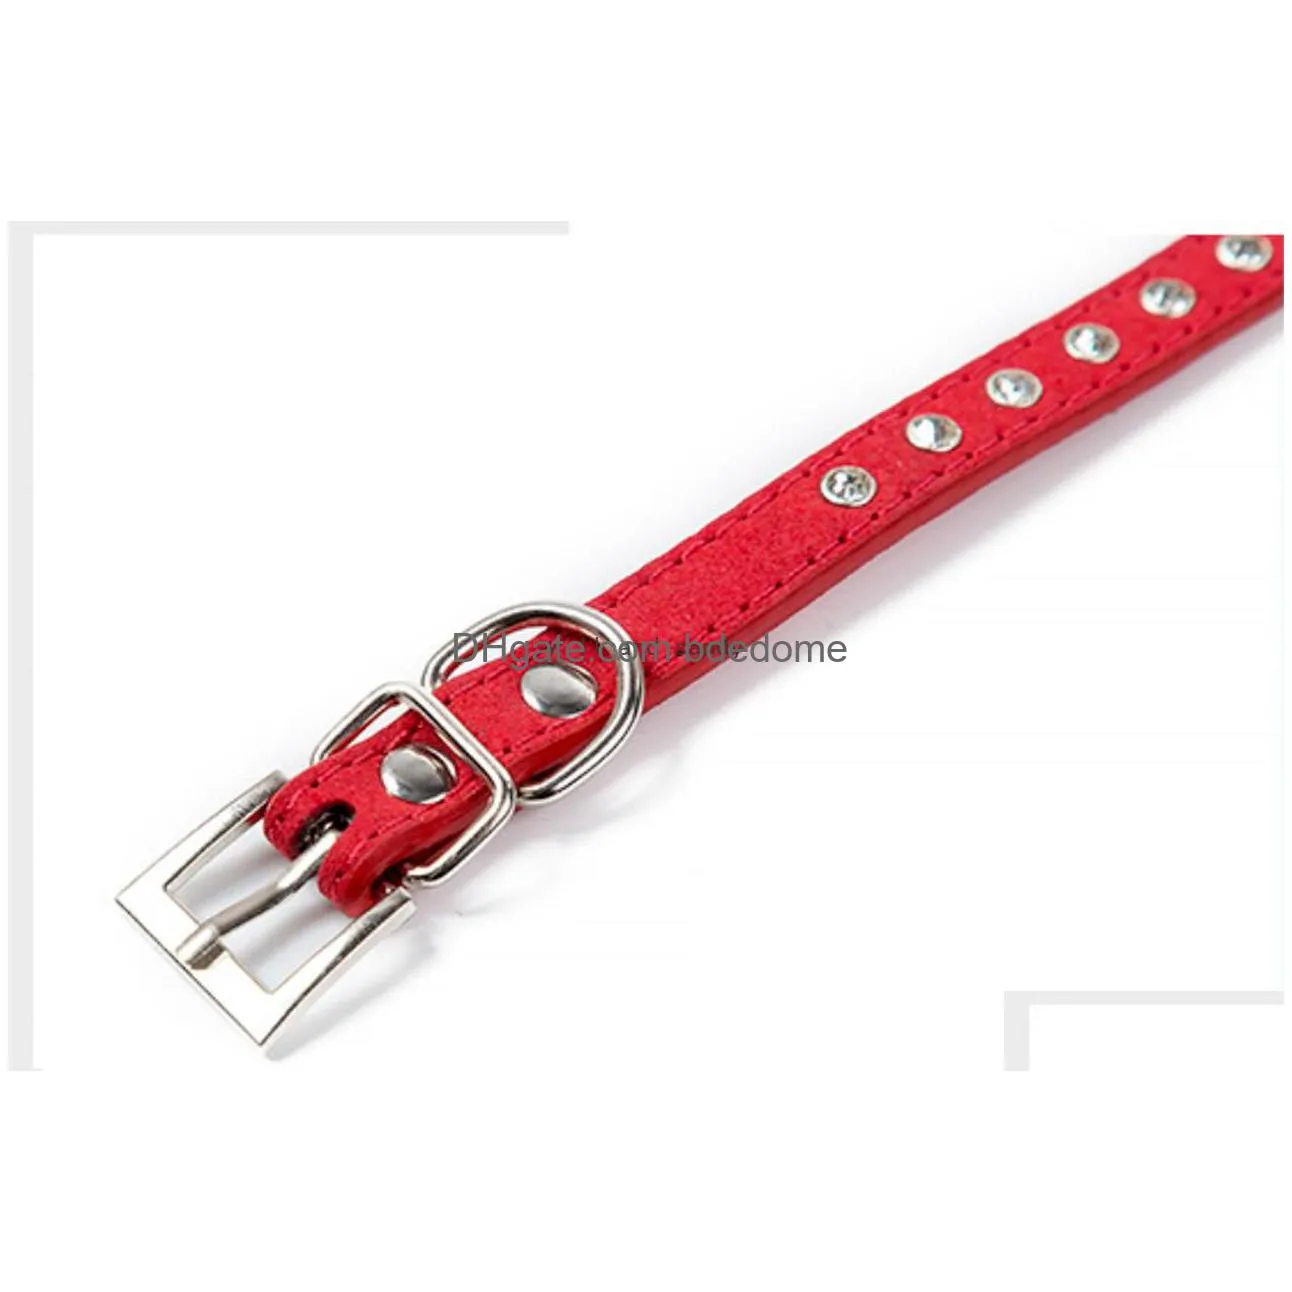 fashion crystal diamond pet dog cat collar neck metal pin buckle adjustable puppy leash collars supplies red black pink